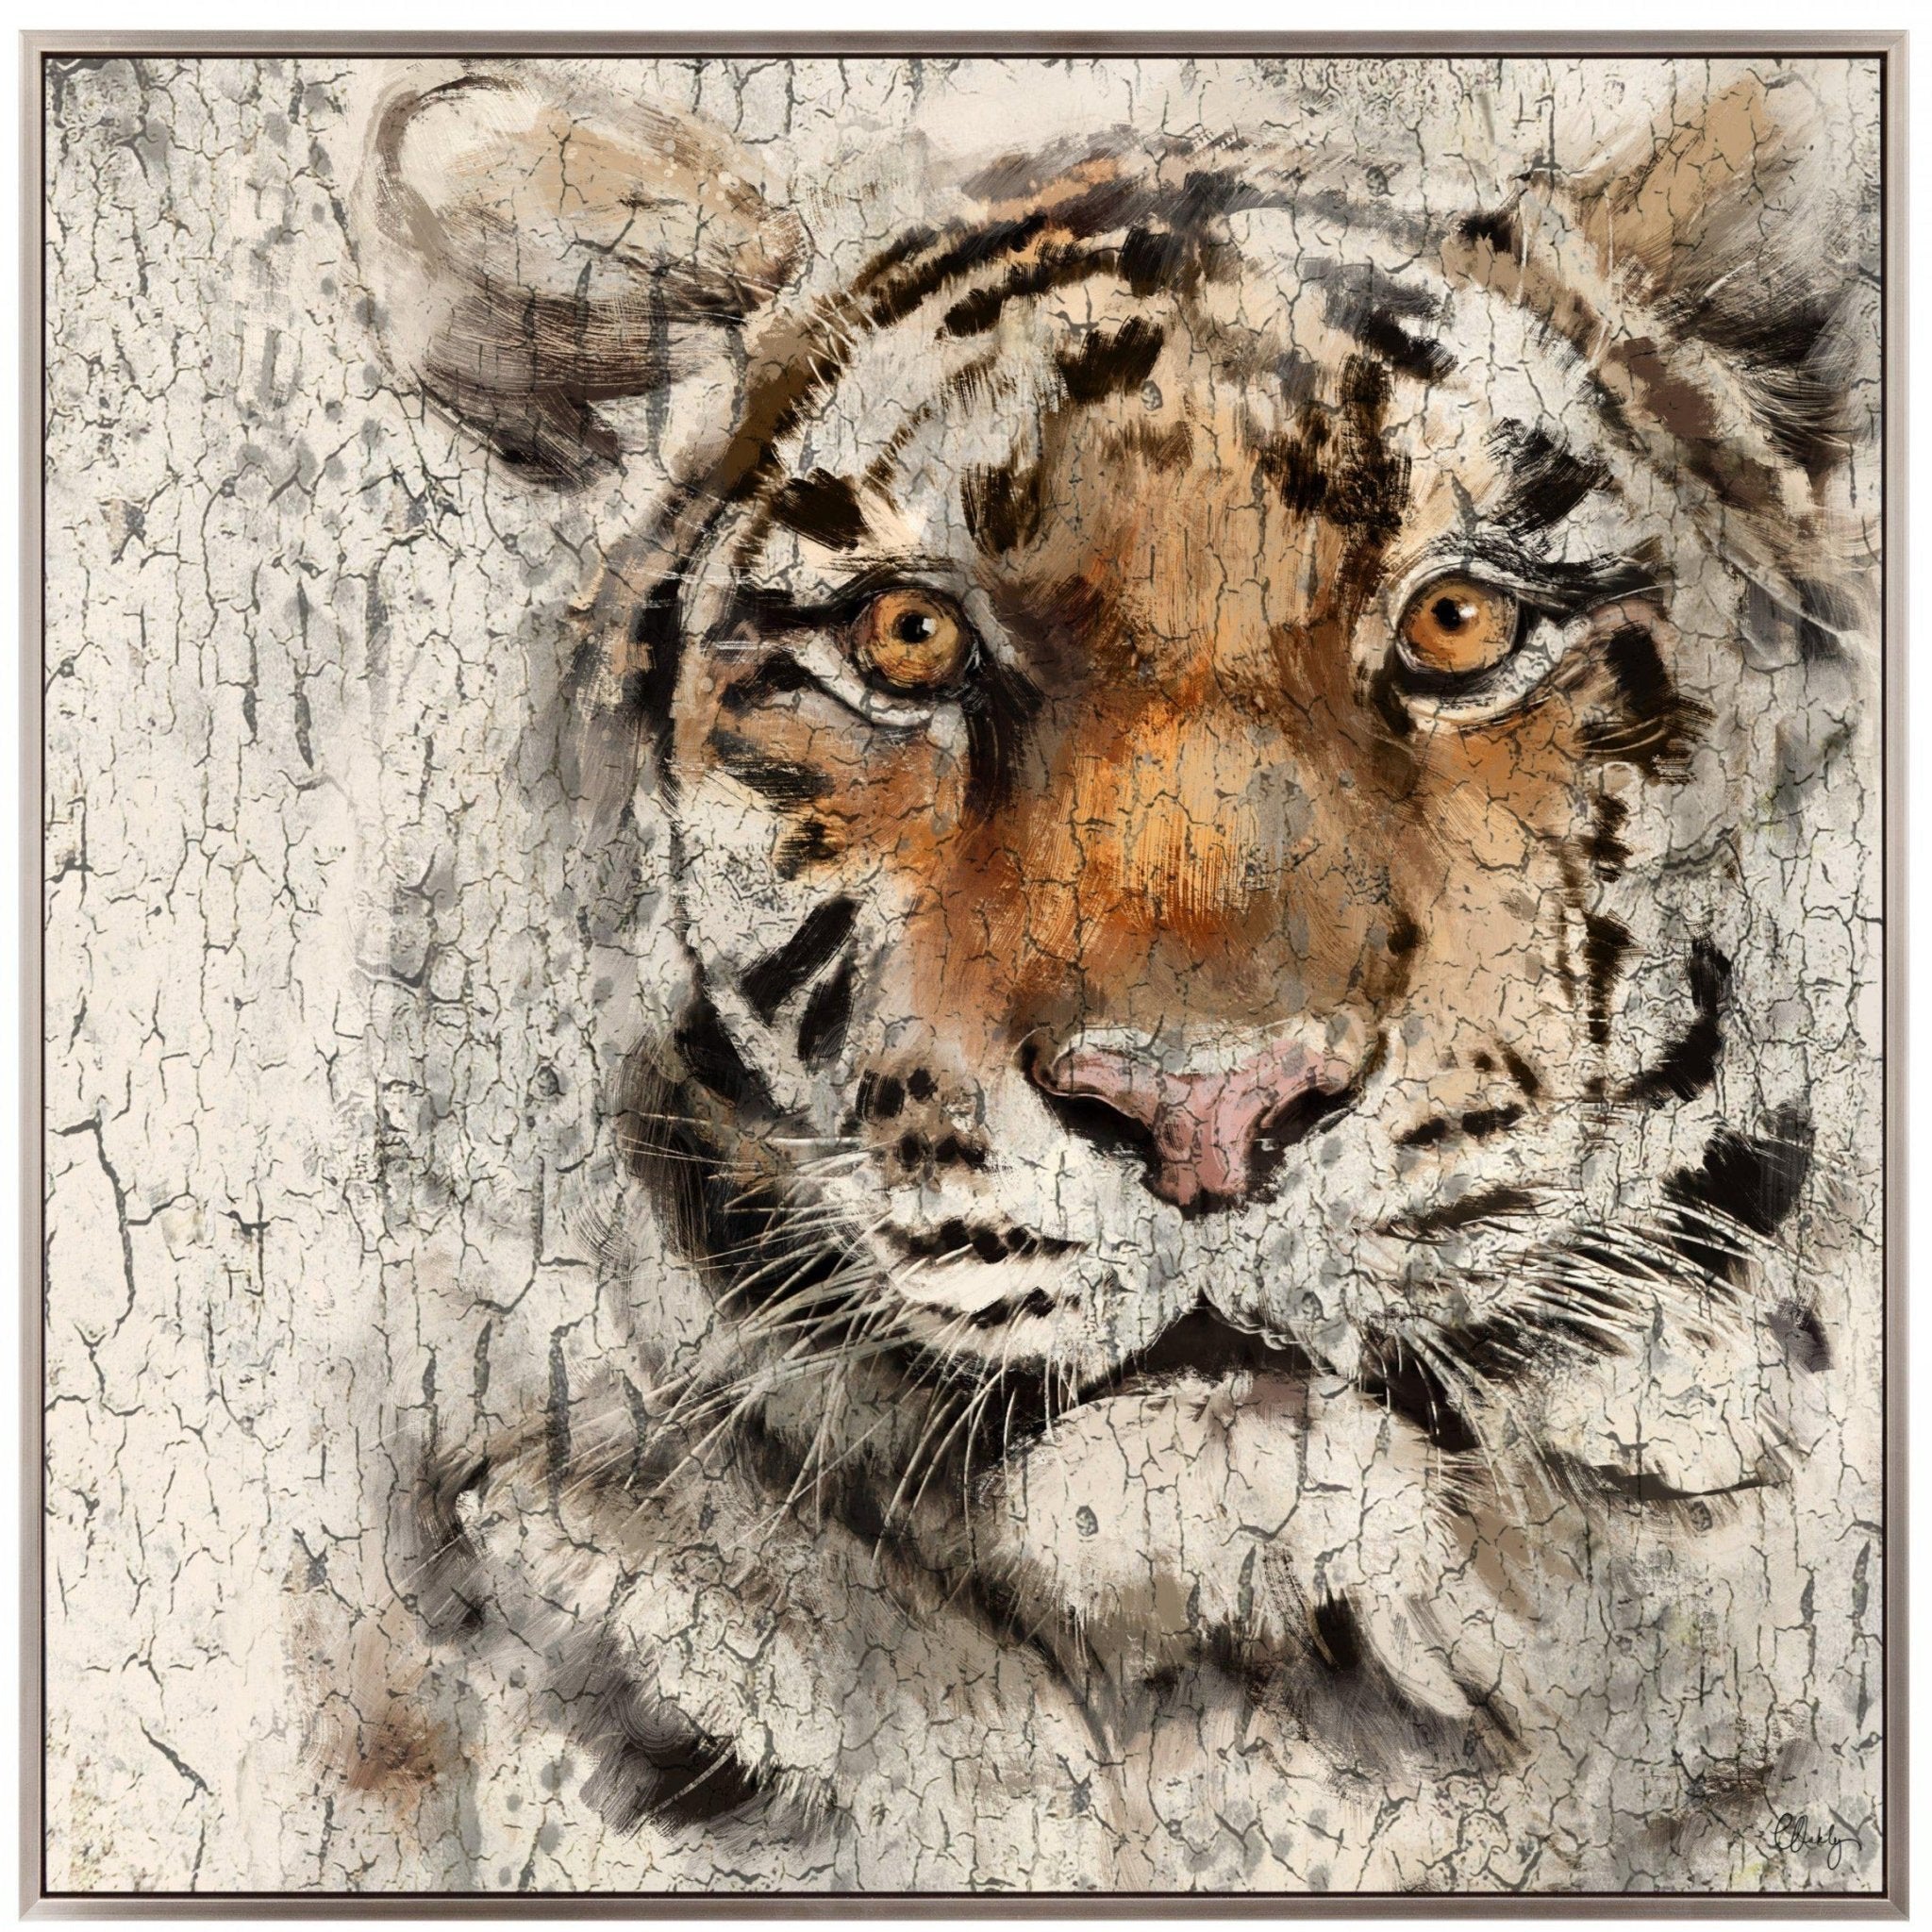 Tiger Kingdom by Charlotte Oakley - Duck Barn Interiors